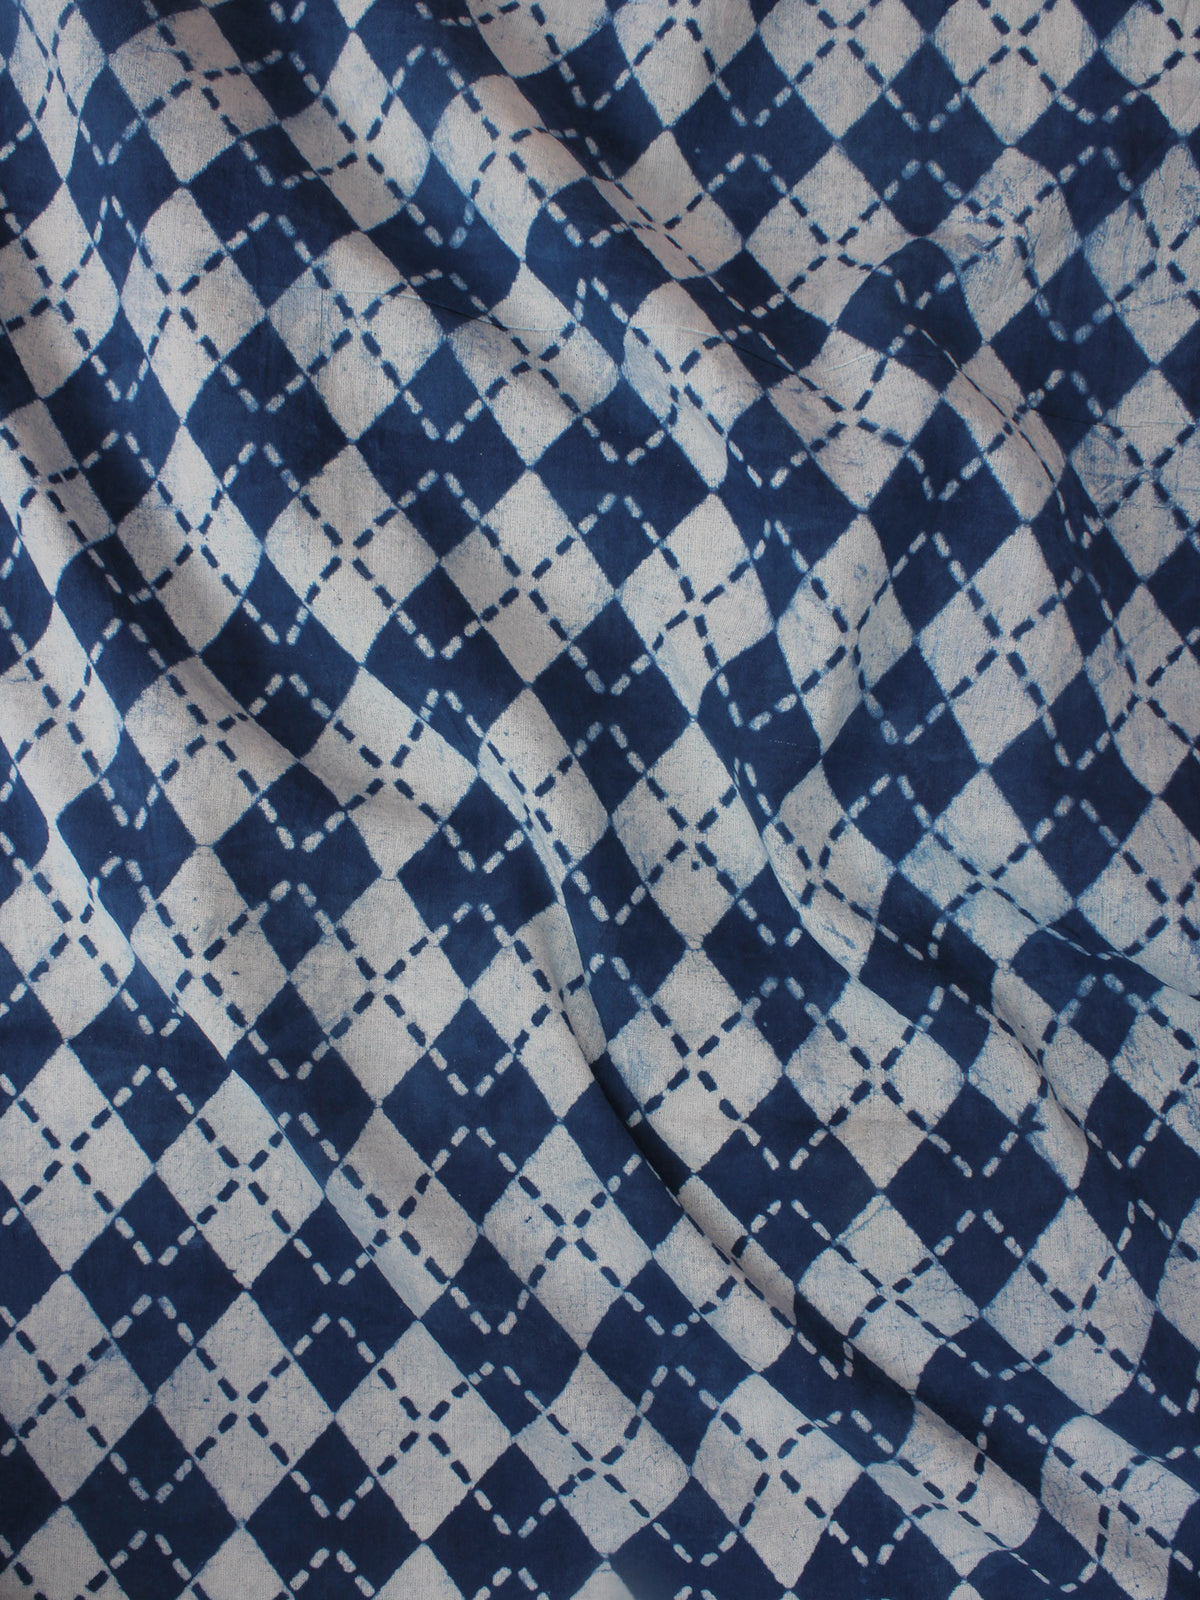 Indigo Blue White Hand Block Printed Cotton Fabric Per Meter - F0916023